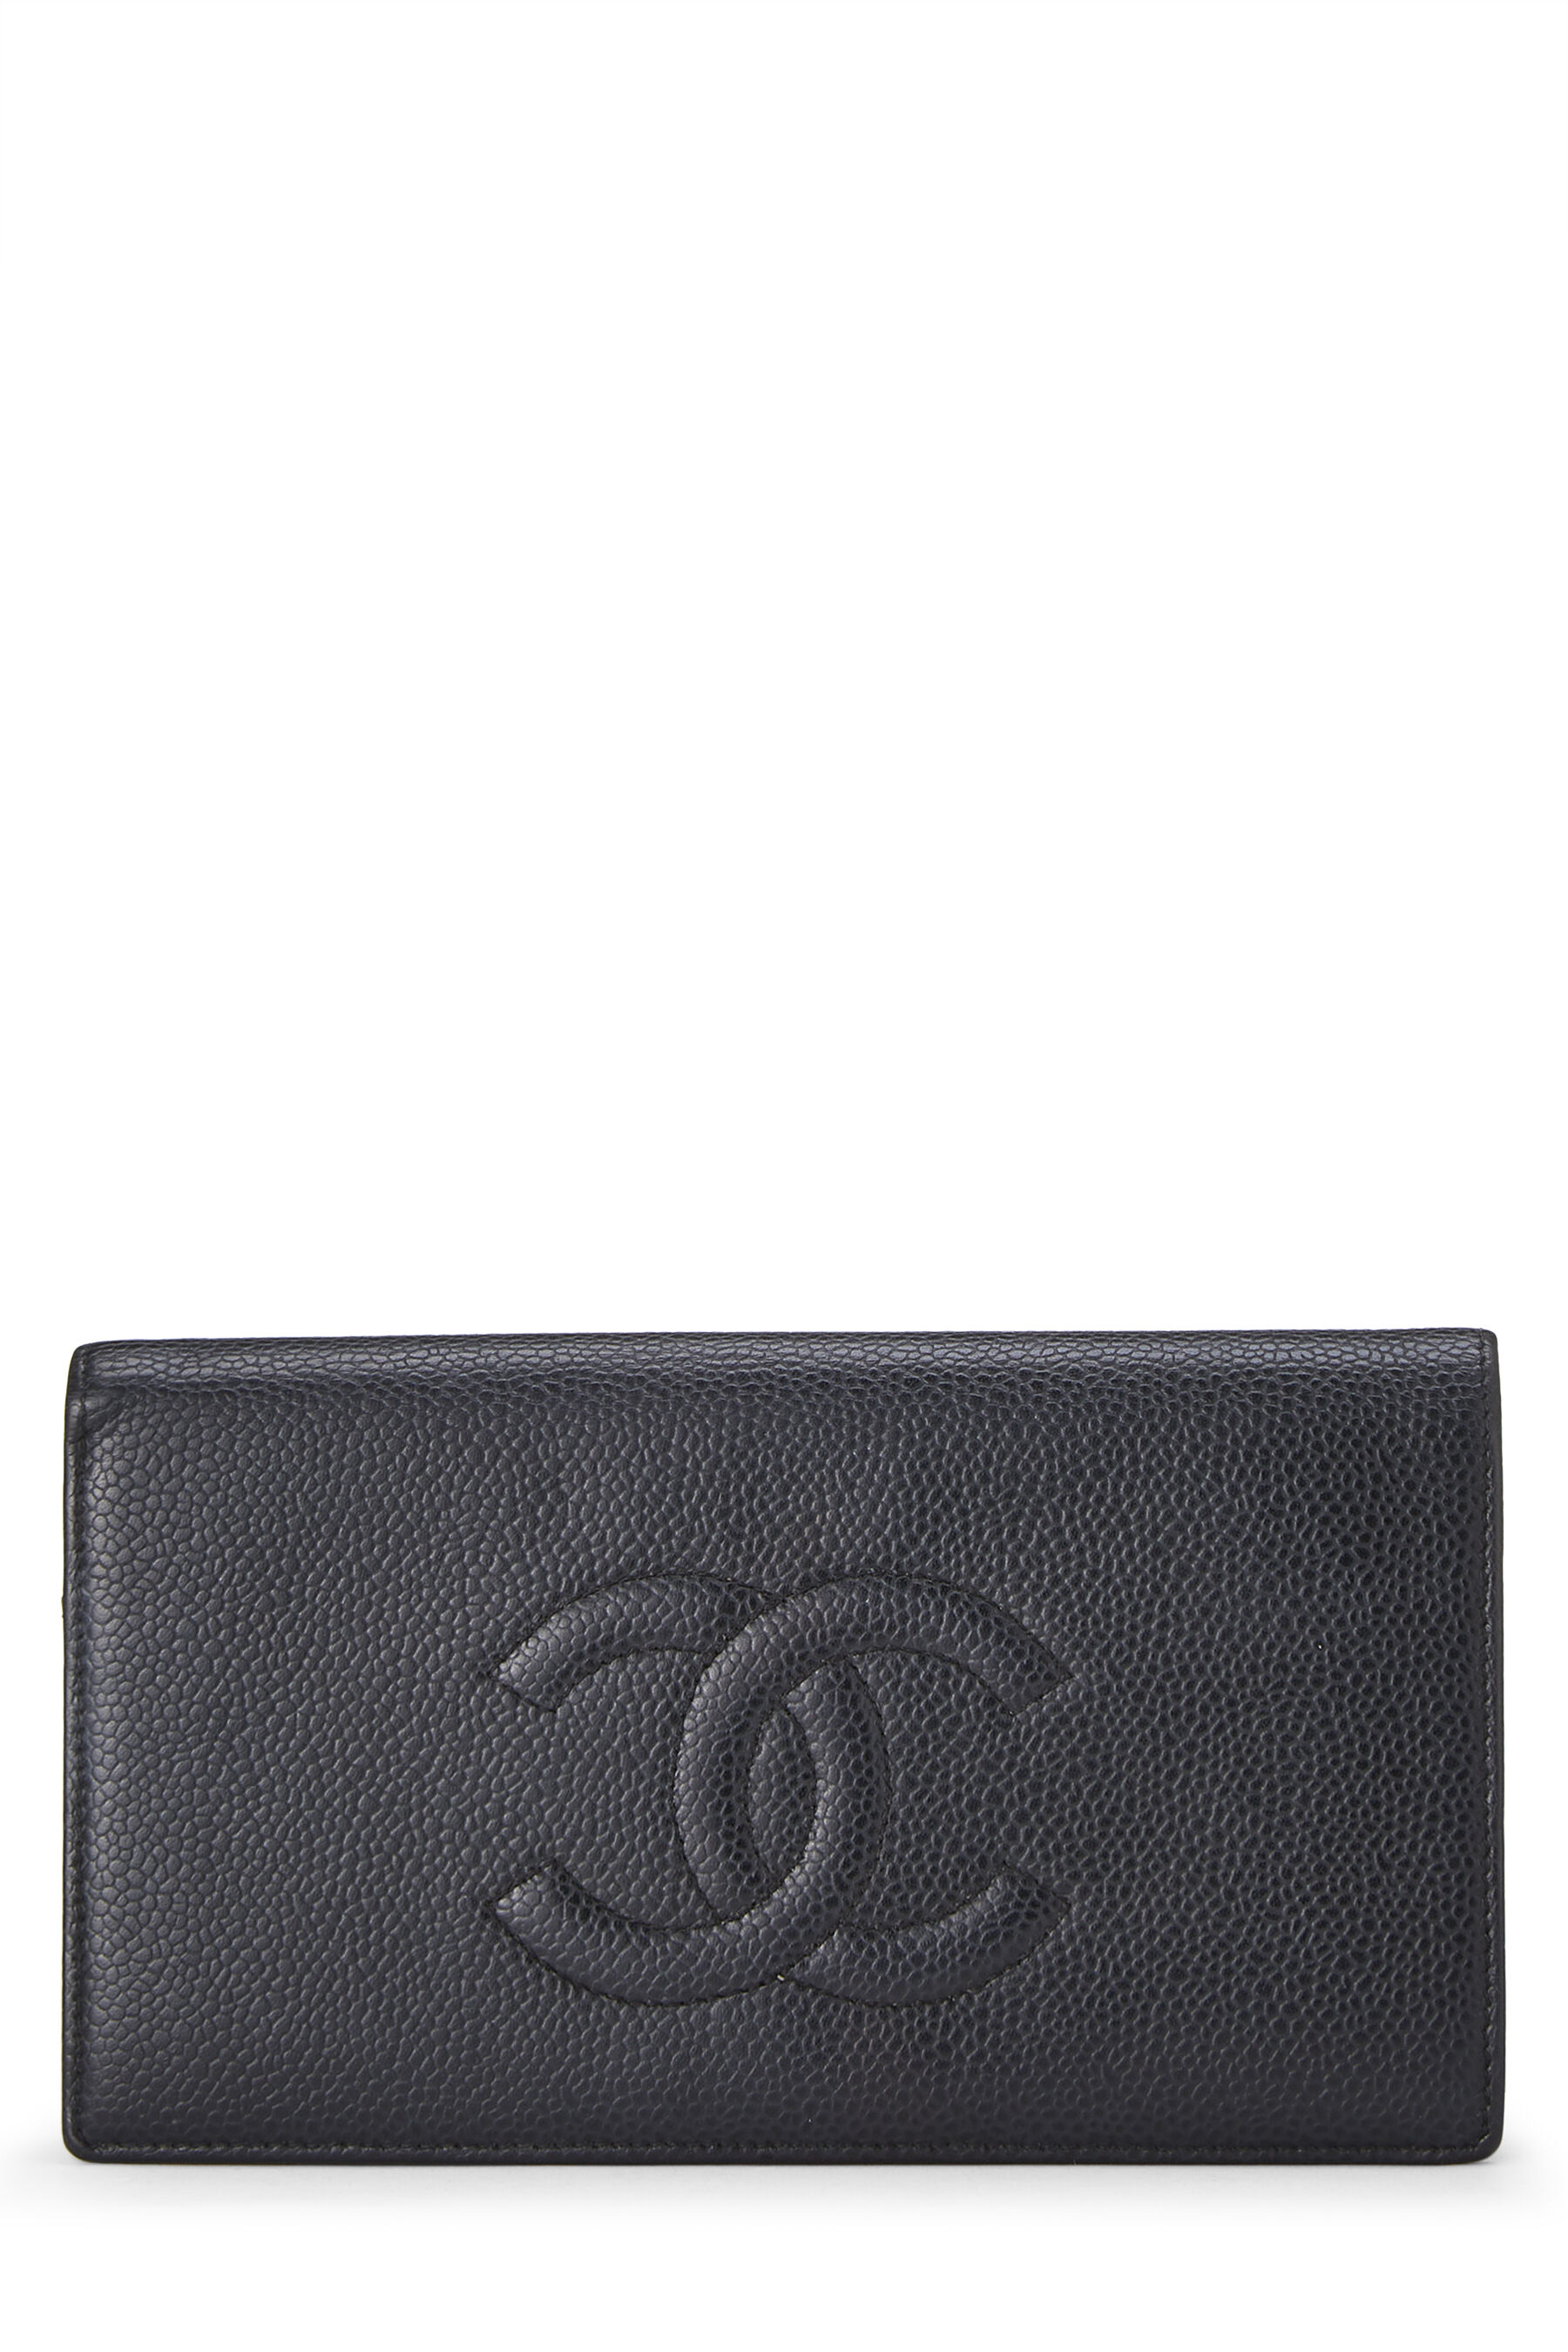 Chanel - Black Caviar 'CC' Timeless Long Wallet